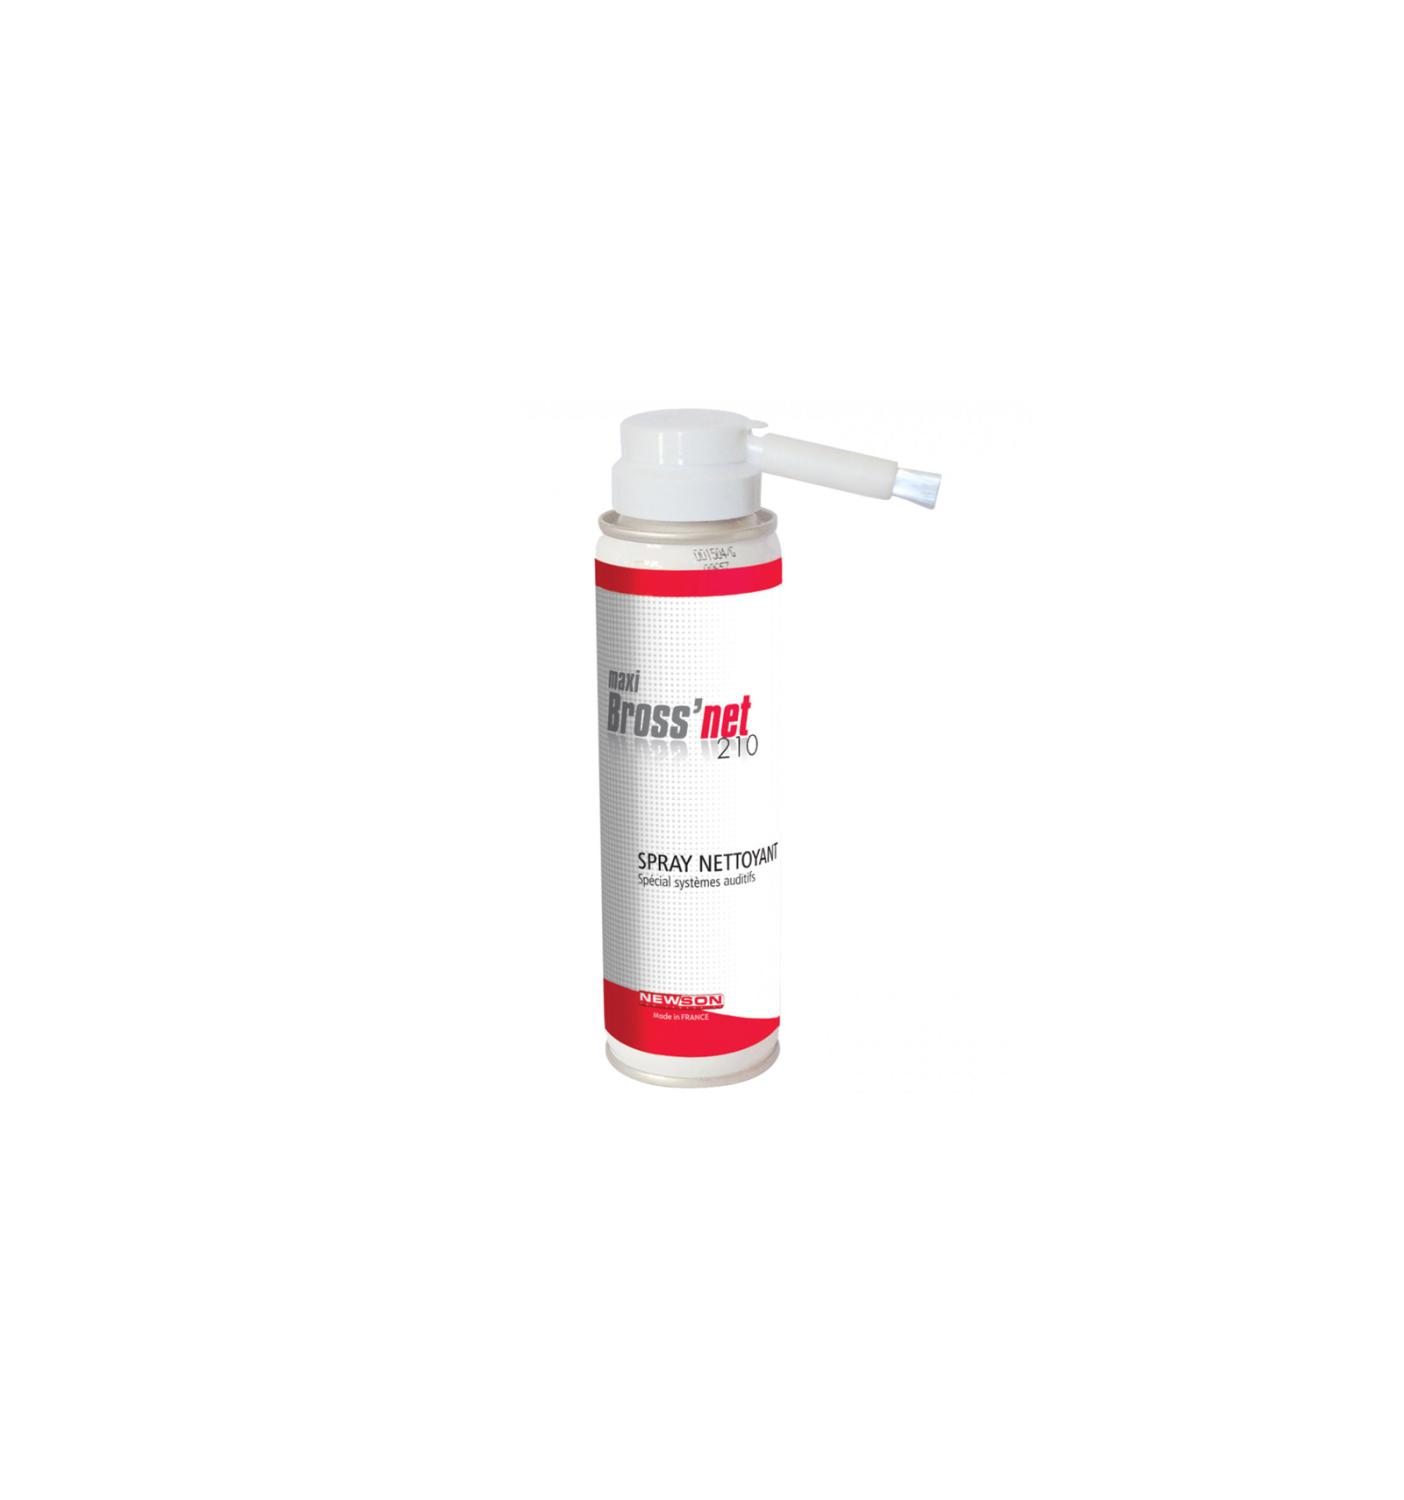 Spray nettoyant Bross'net 210 pour aide auditive